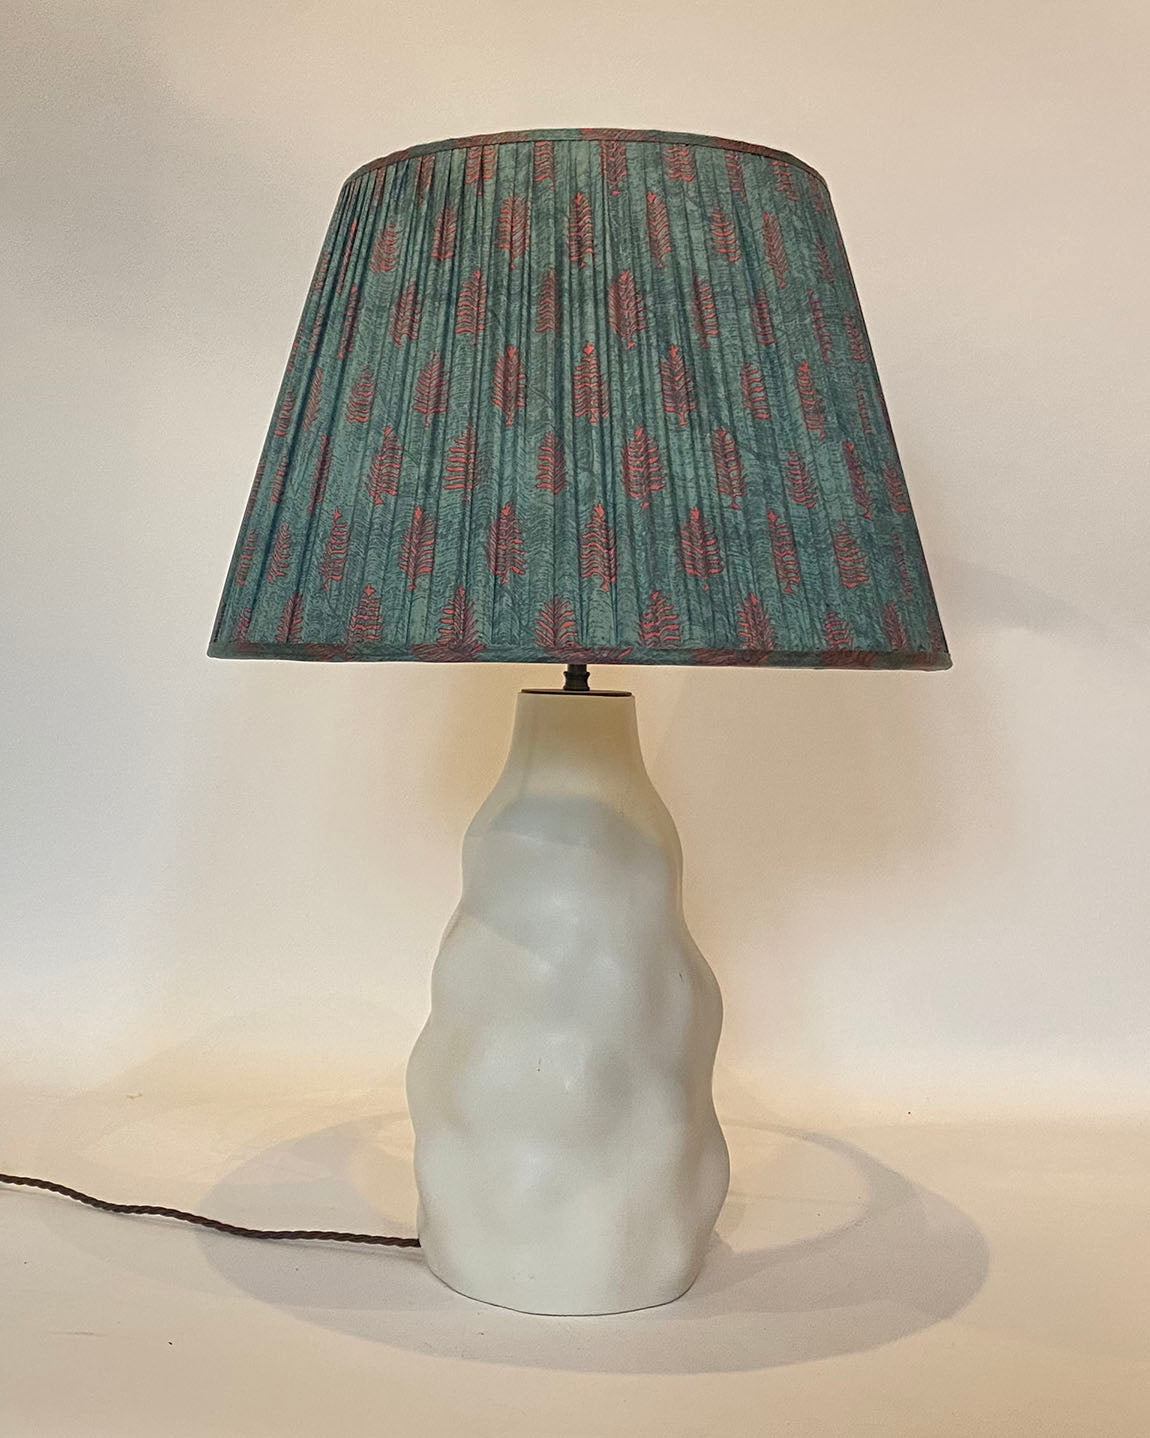 Teal with Pink Paisley Vintage Silk Sari Lampshade on an iki lamp base